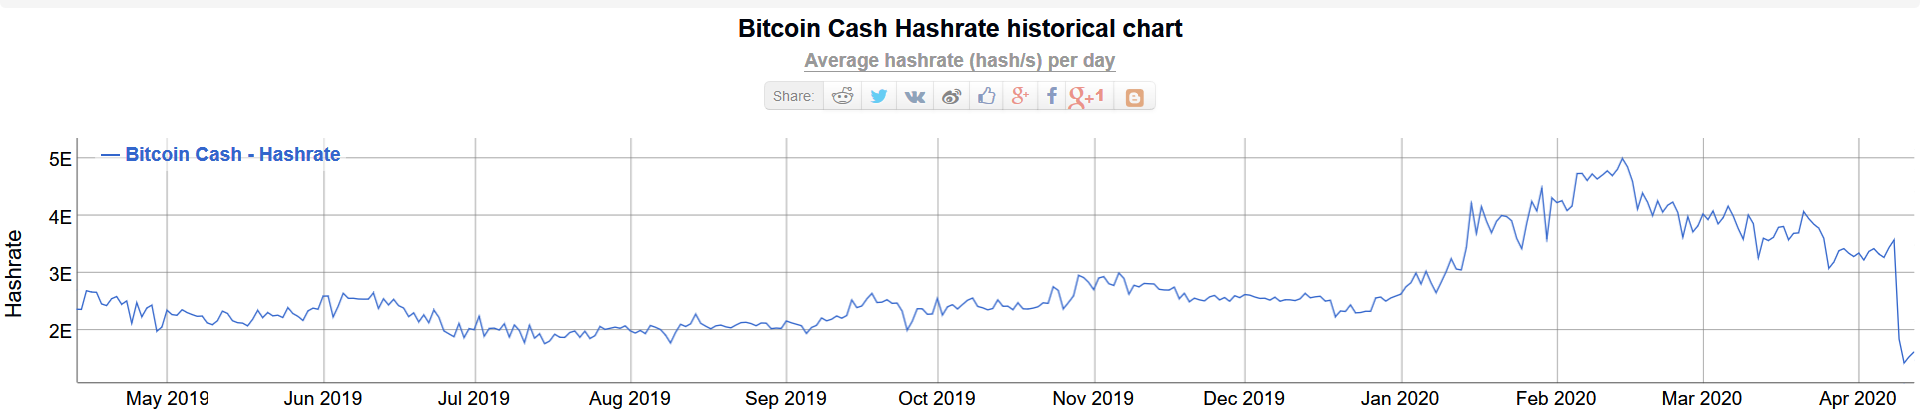 Bitcoin Cash hash rate chart